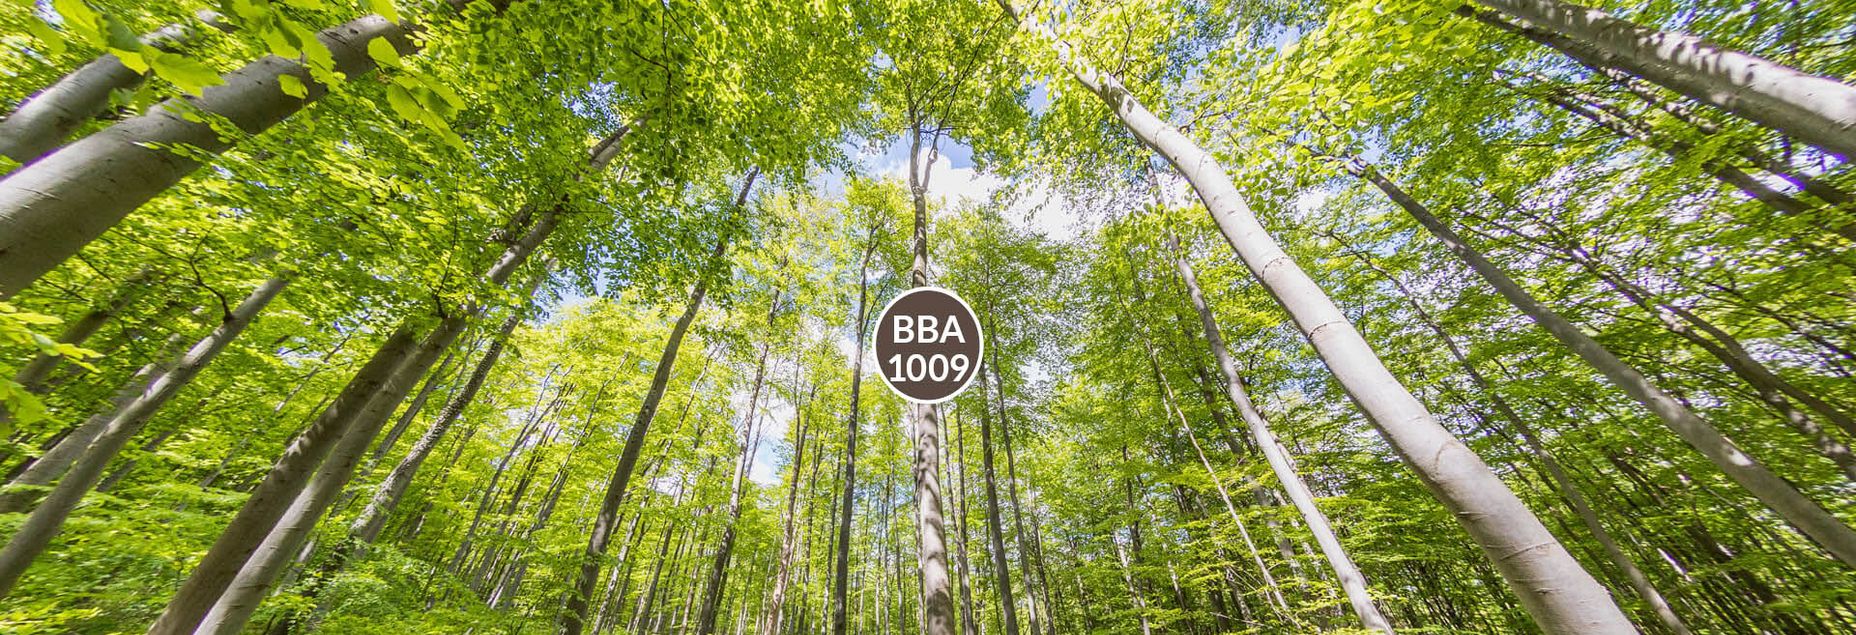 Baum BBA 1009 - Fisheyeperspektive